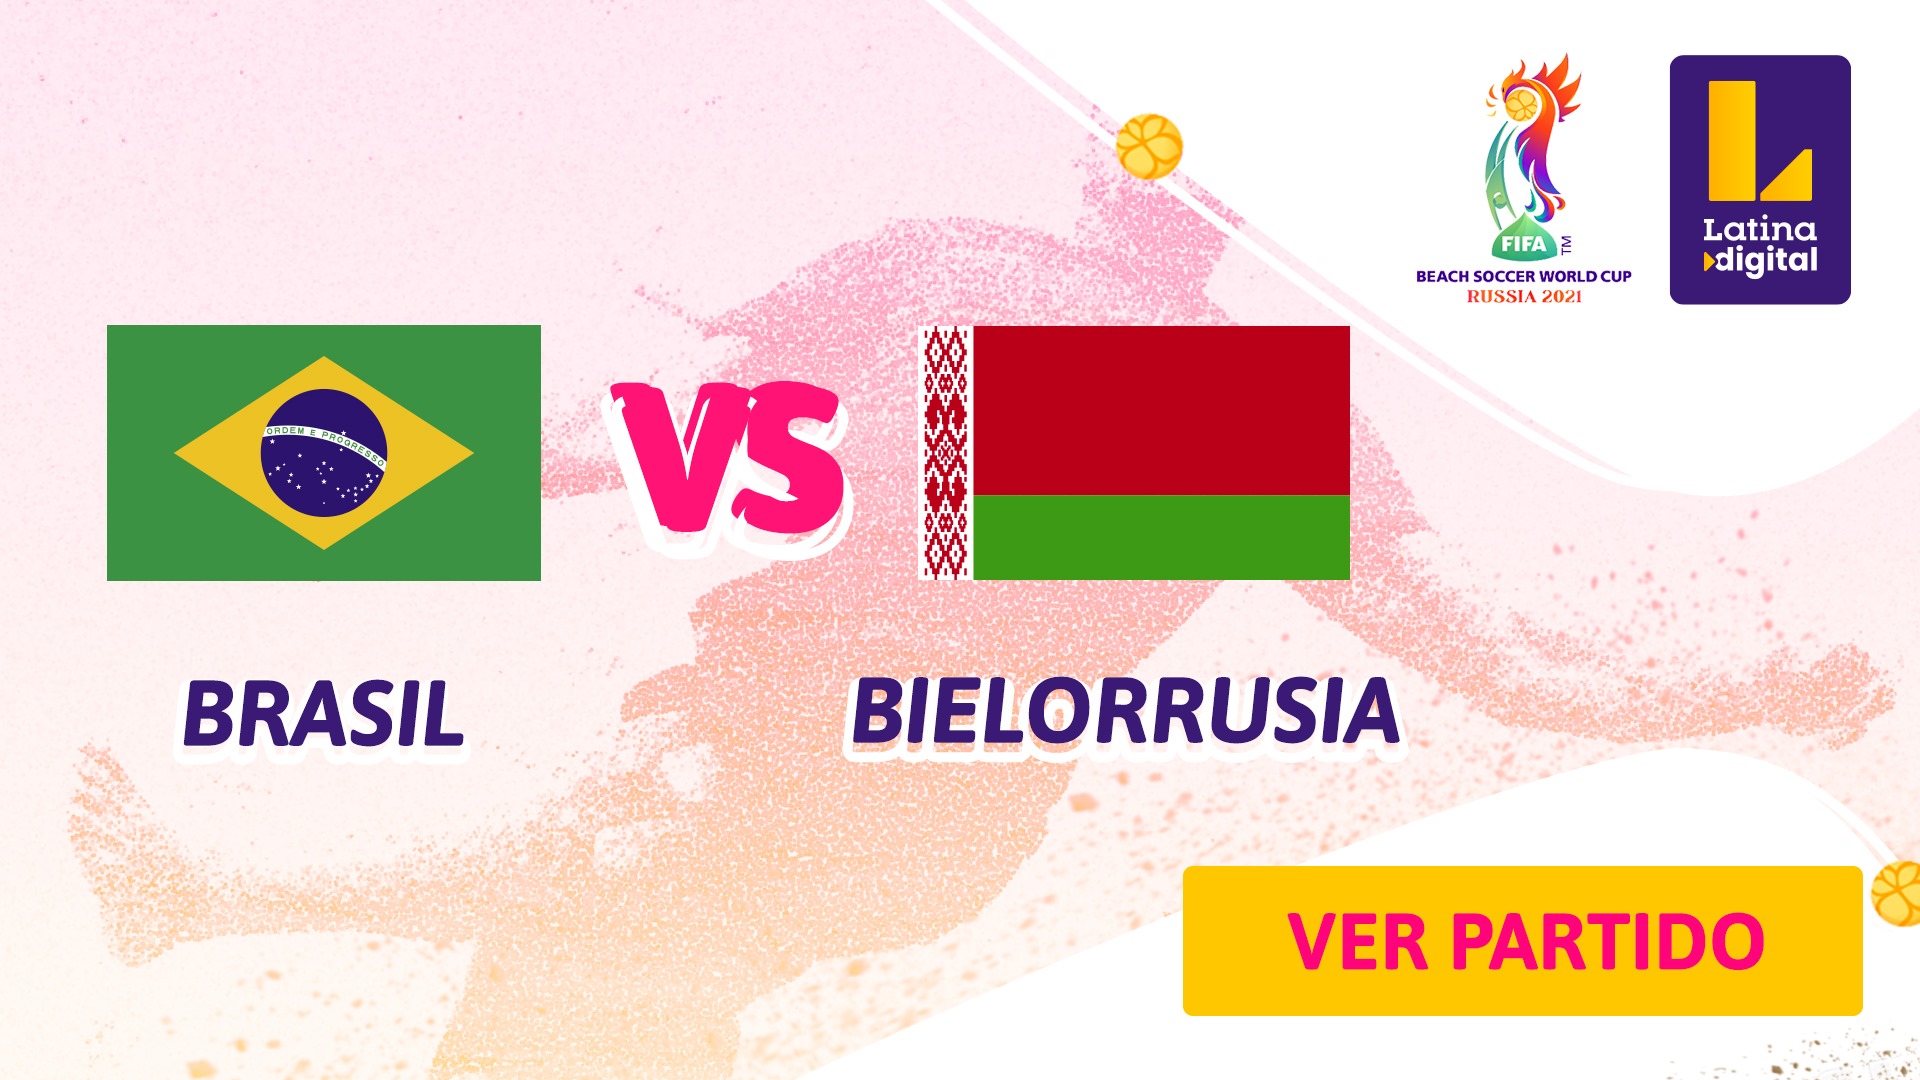 Brasil vs. Bielorrusia por la Copa Mundial de Beach Soccer de la FIFA Rusia 2021